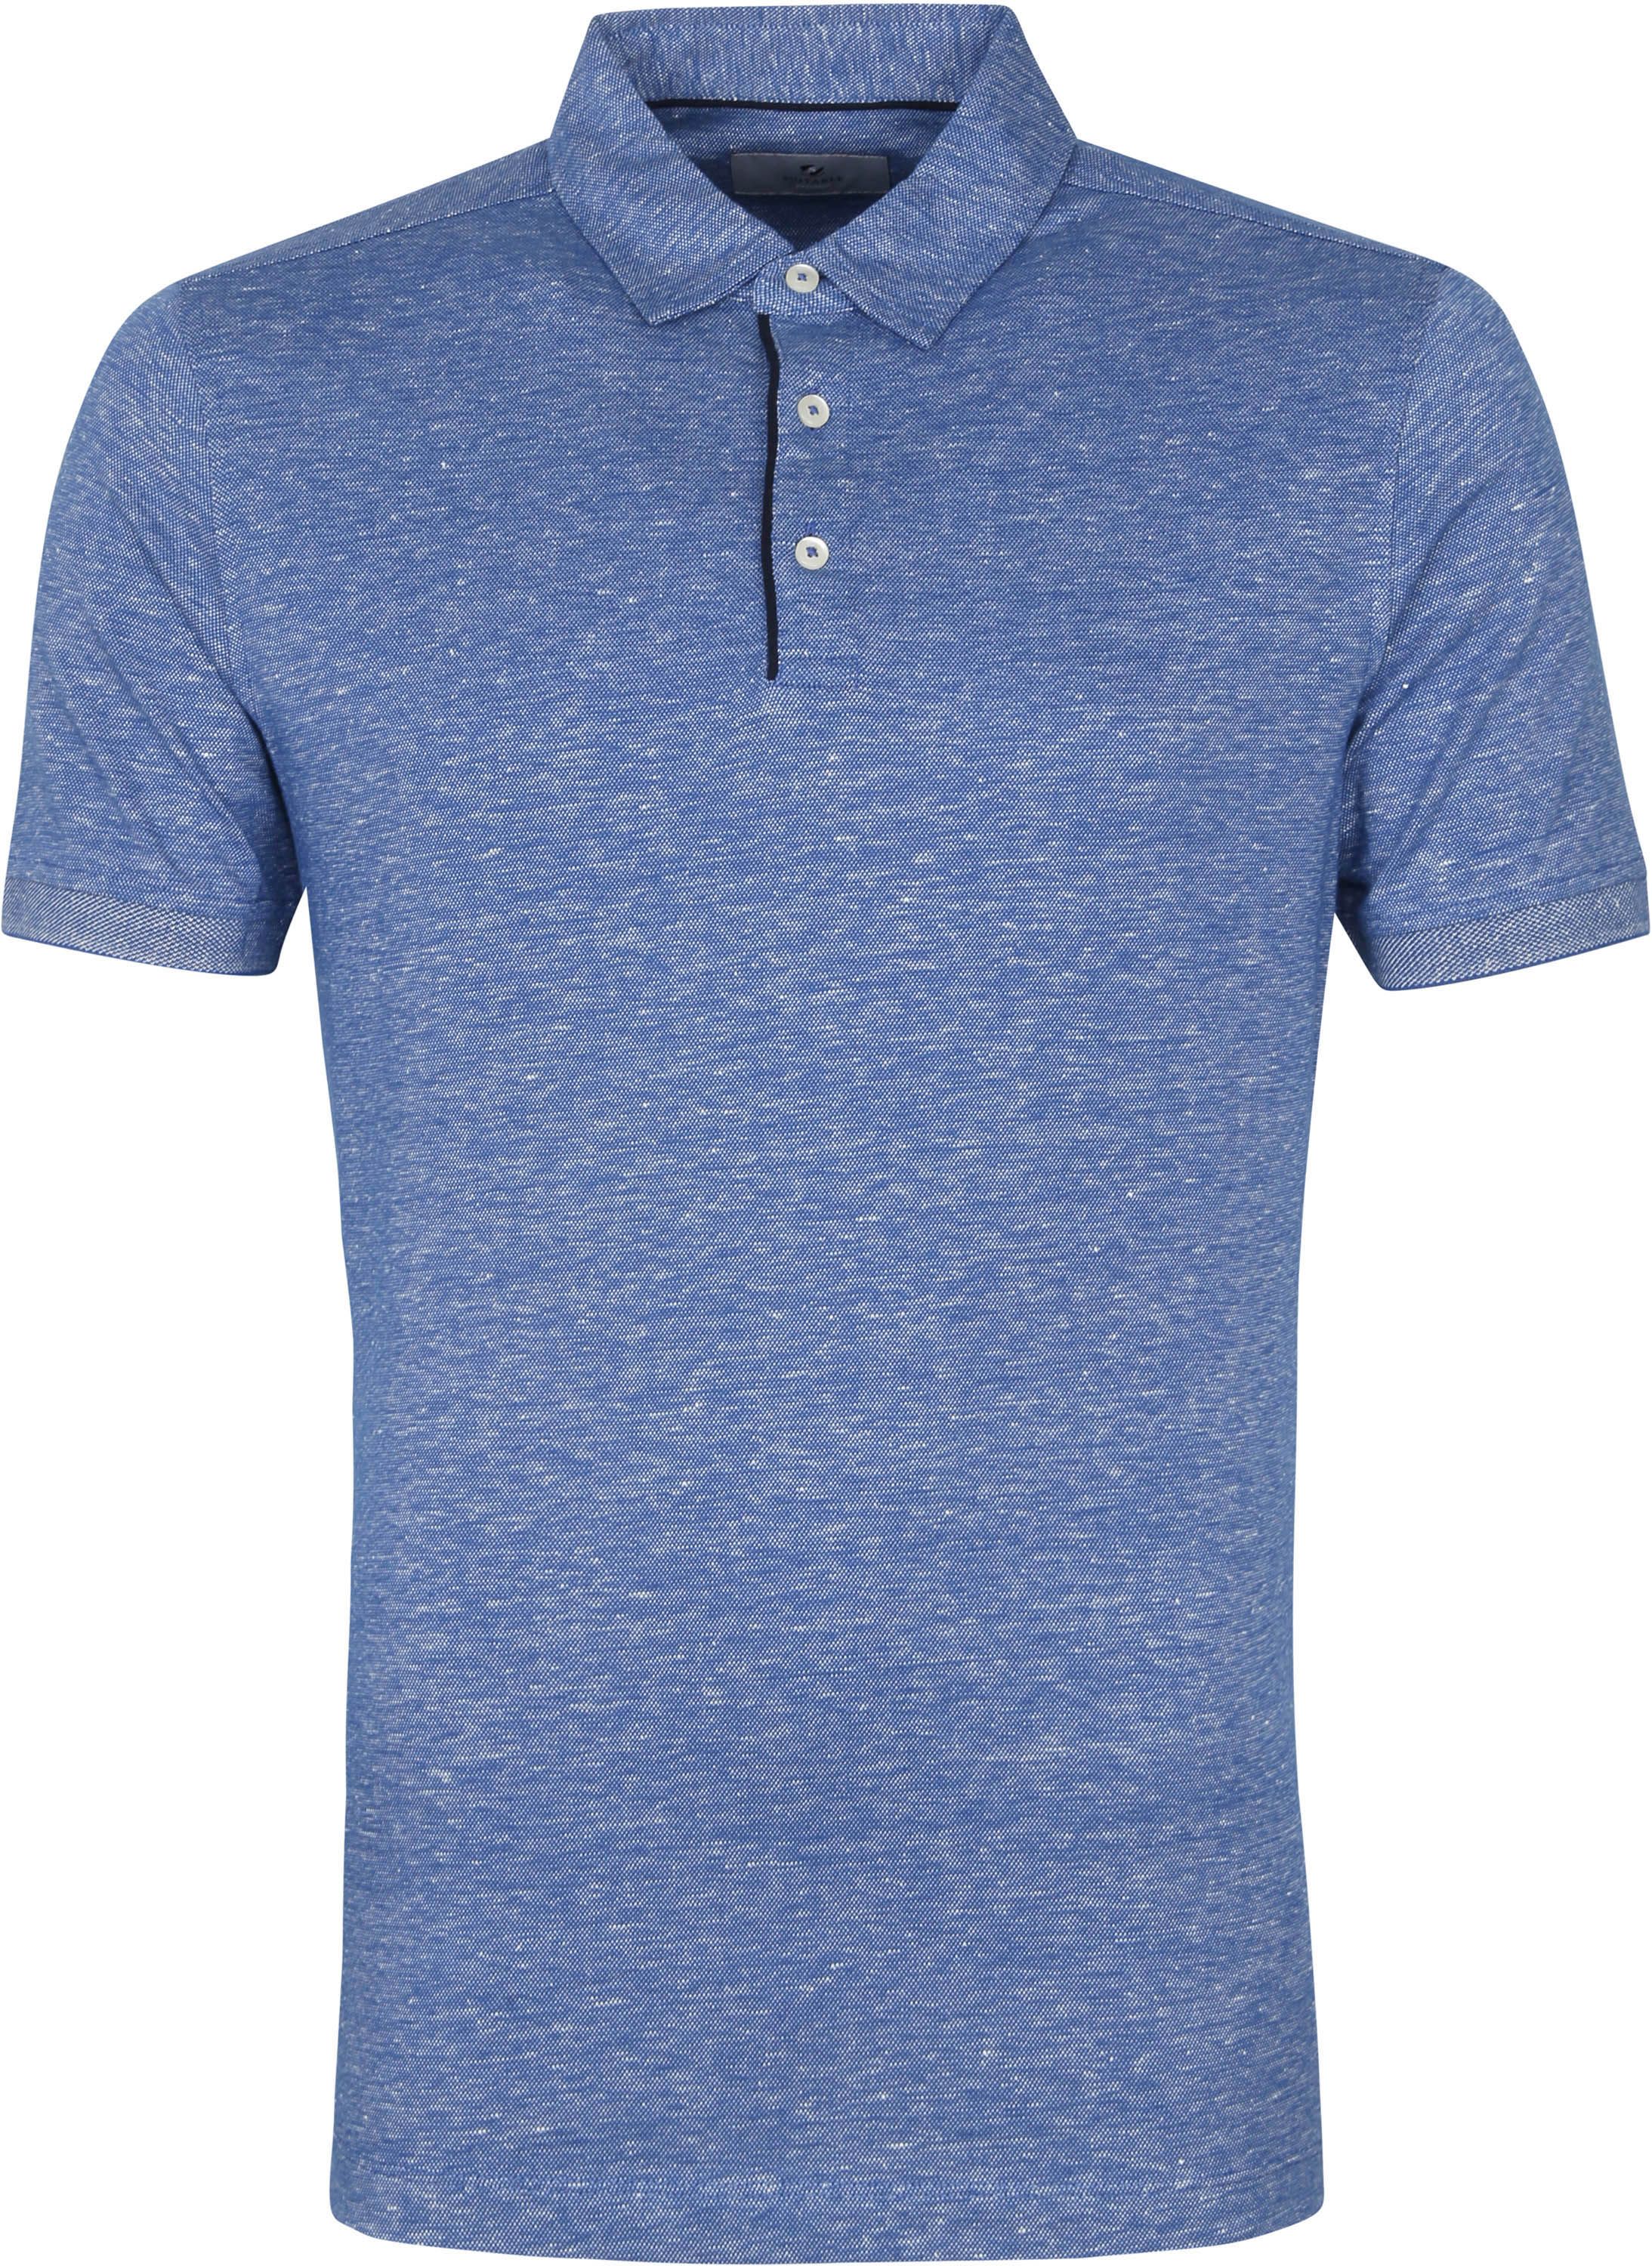 Suitable Prestige Melange Polo Shirt Indigo White Blue size 3XL